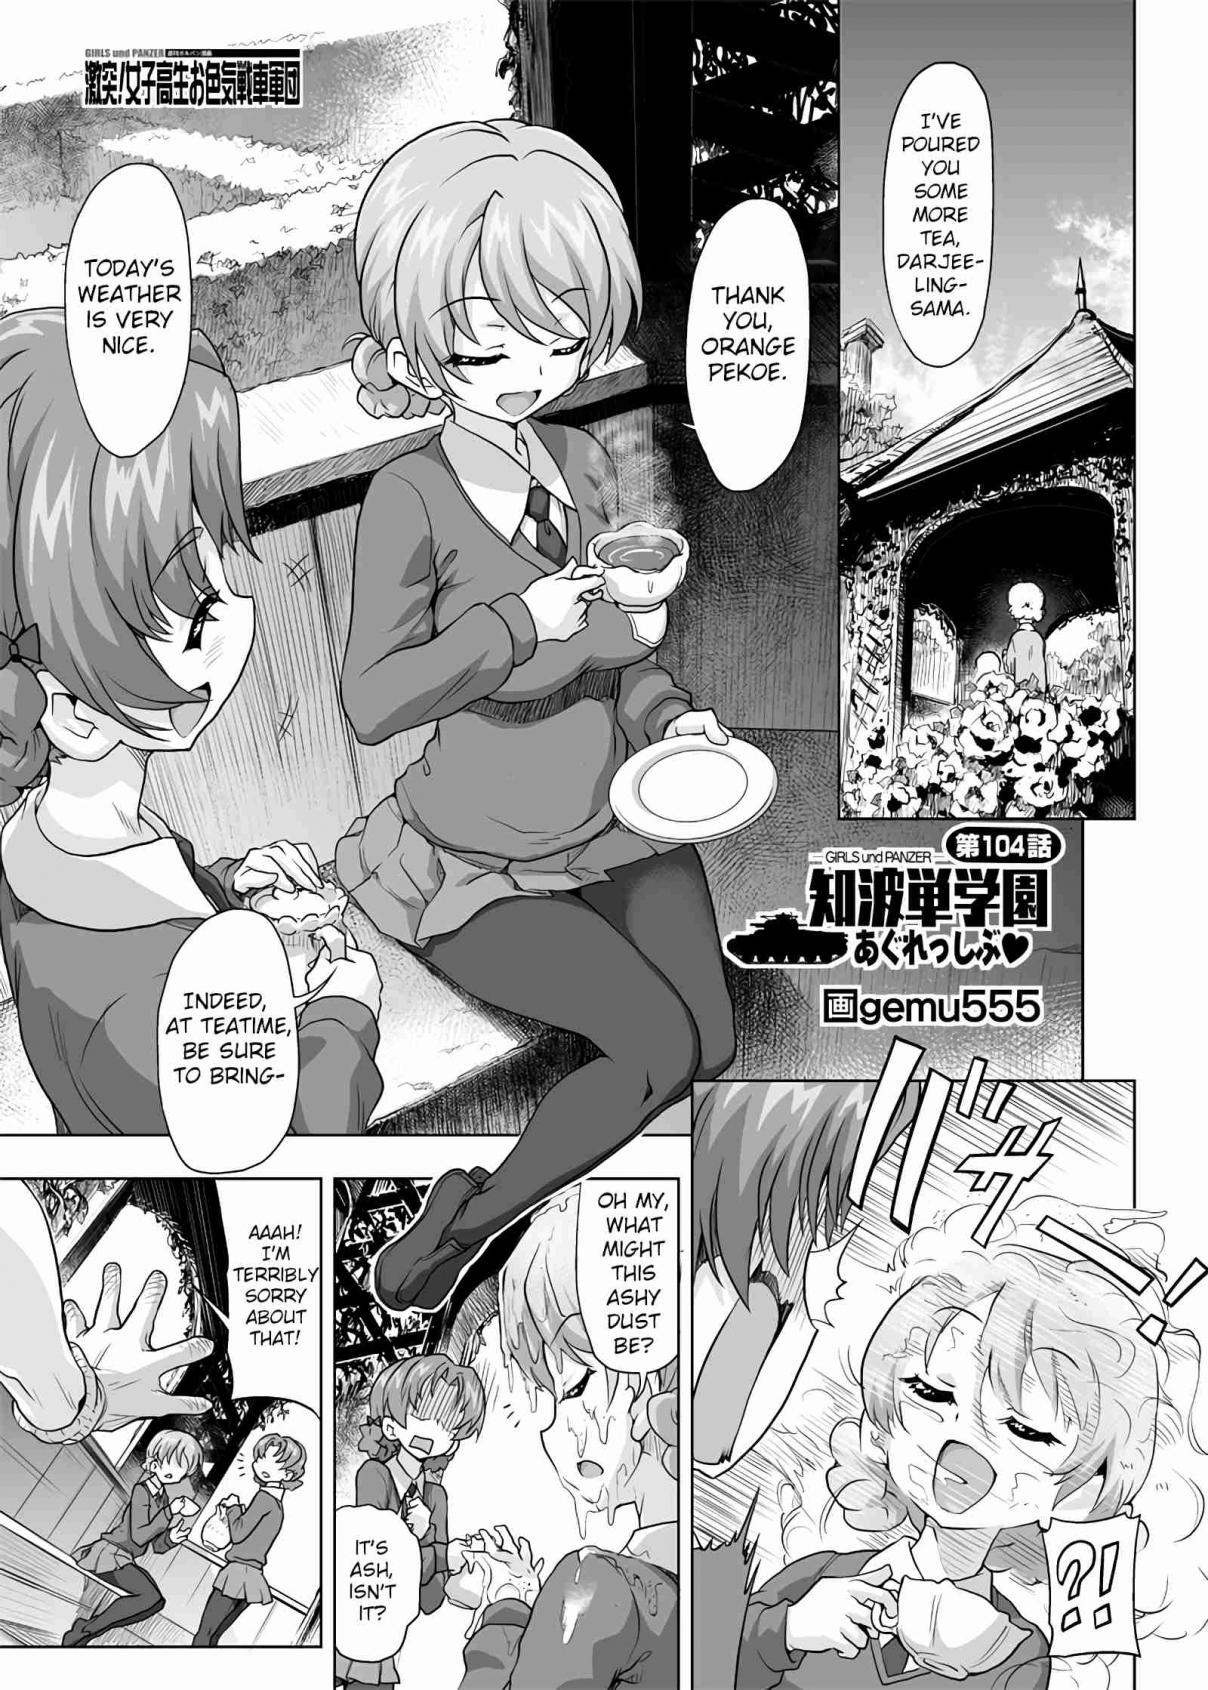 Girls und Panzer Chi HaTan Academy Aggressive (Doujinshi) Vol. 1 Ch. 104